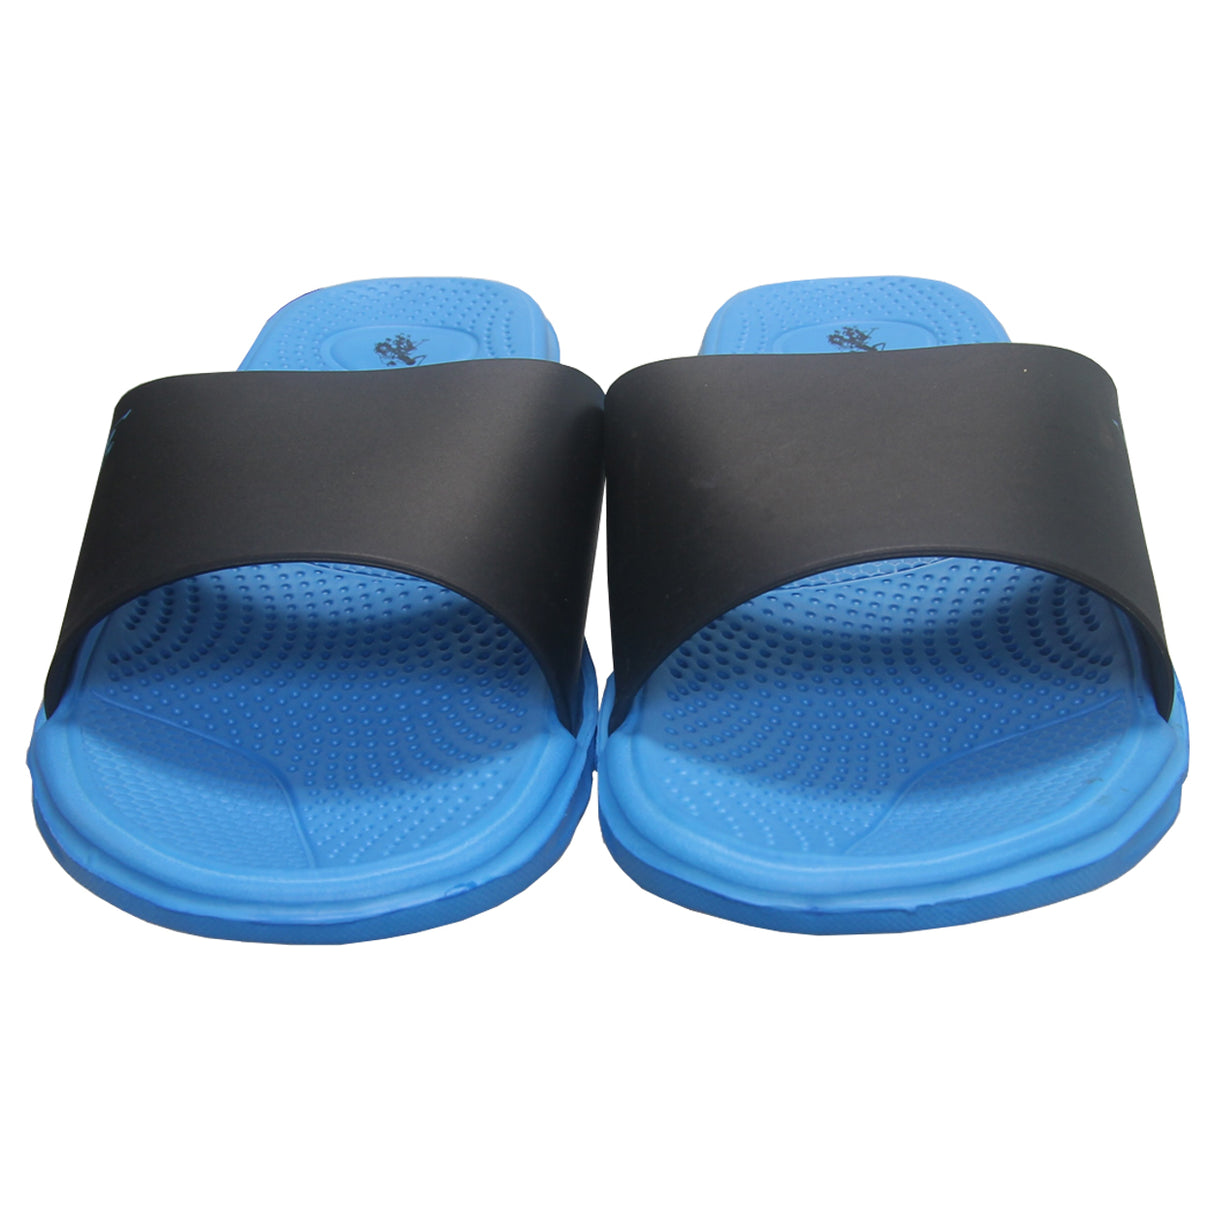 US Polo Asscociation Slide Casual Sandal